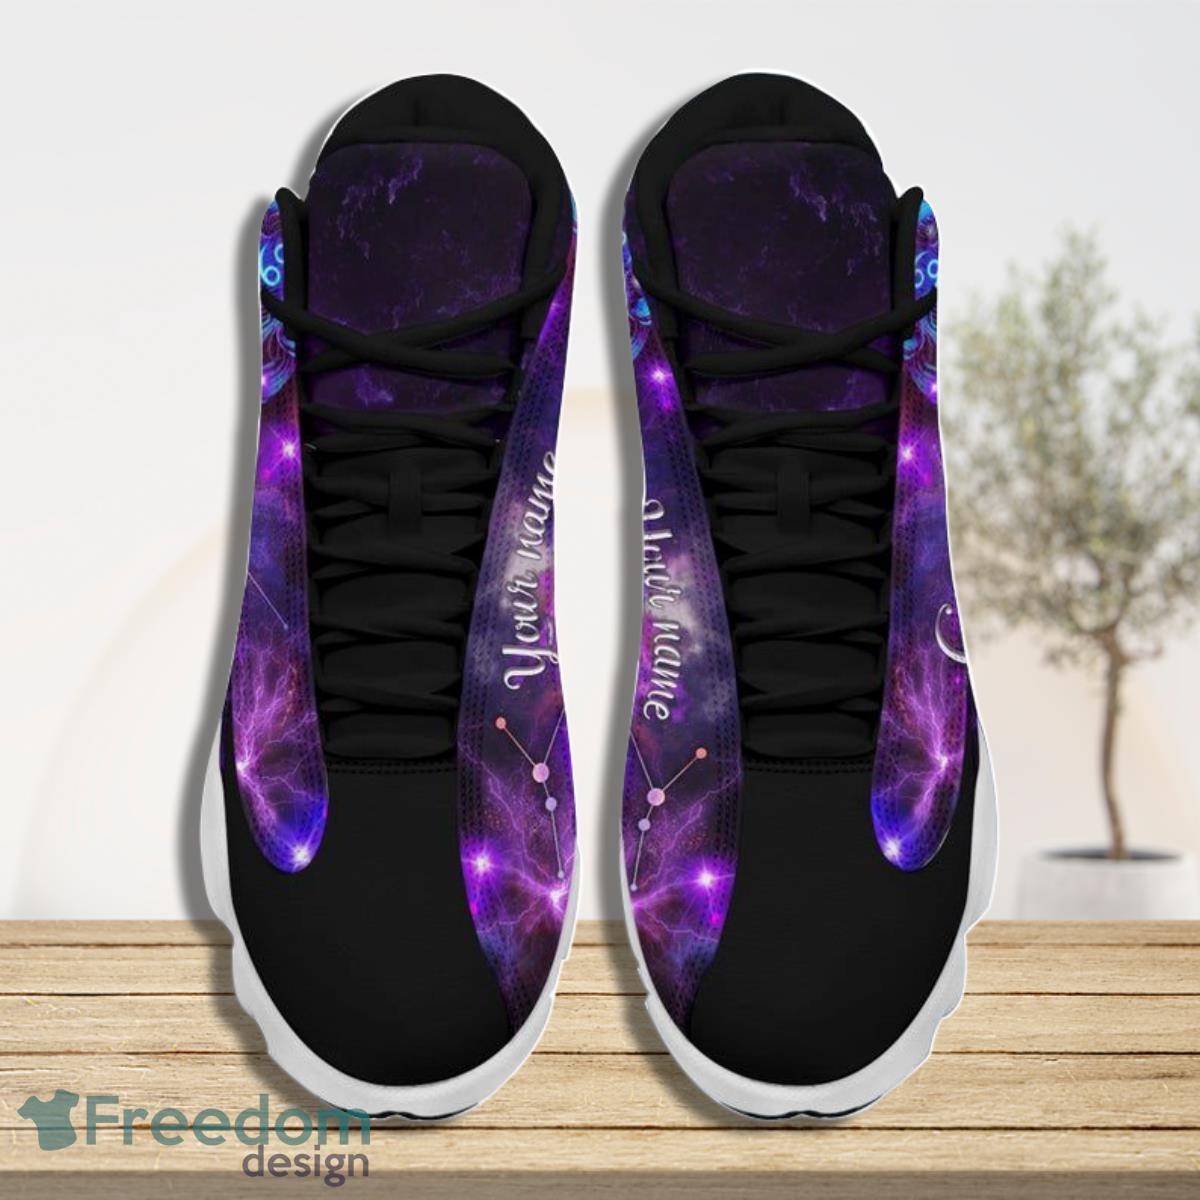 Cancer Dark Galaxy Air Jordan 13 Custom Name Sneakers Best Gift For Men And  Women